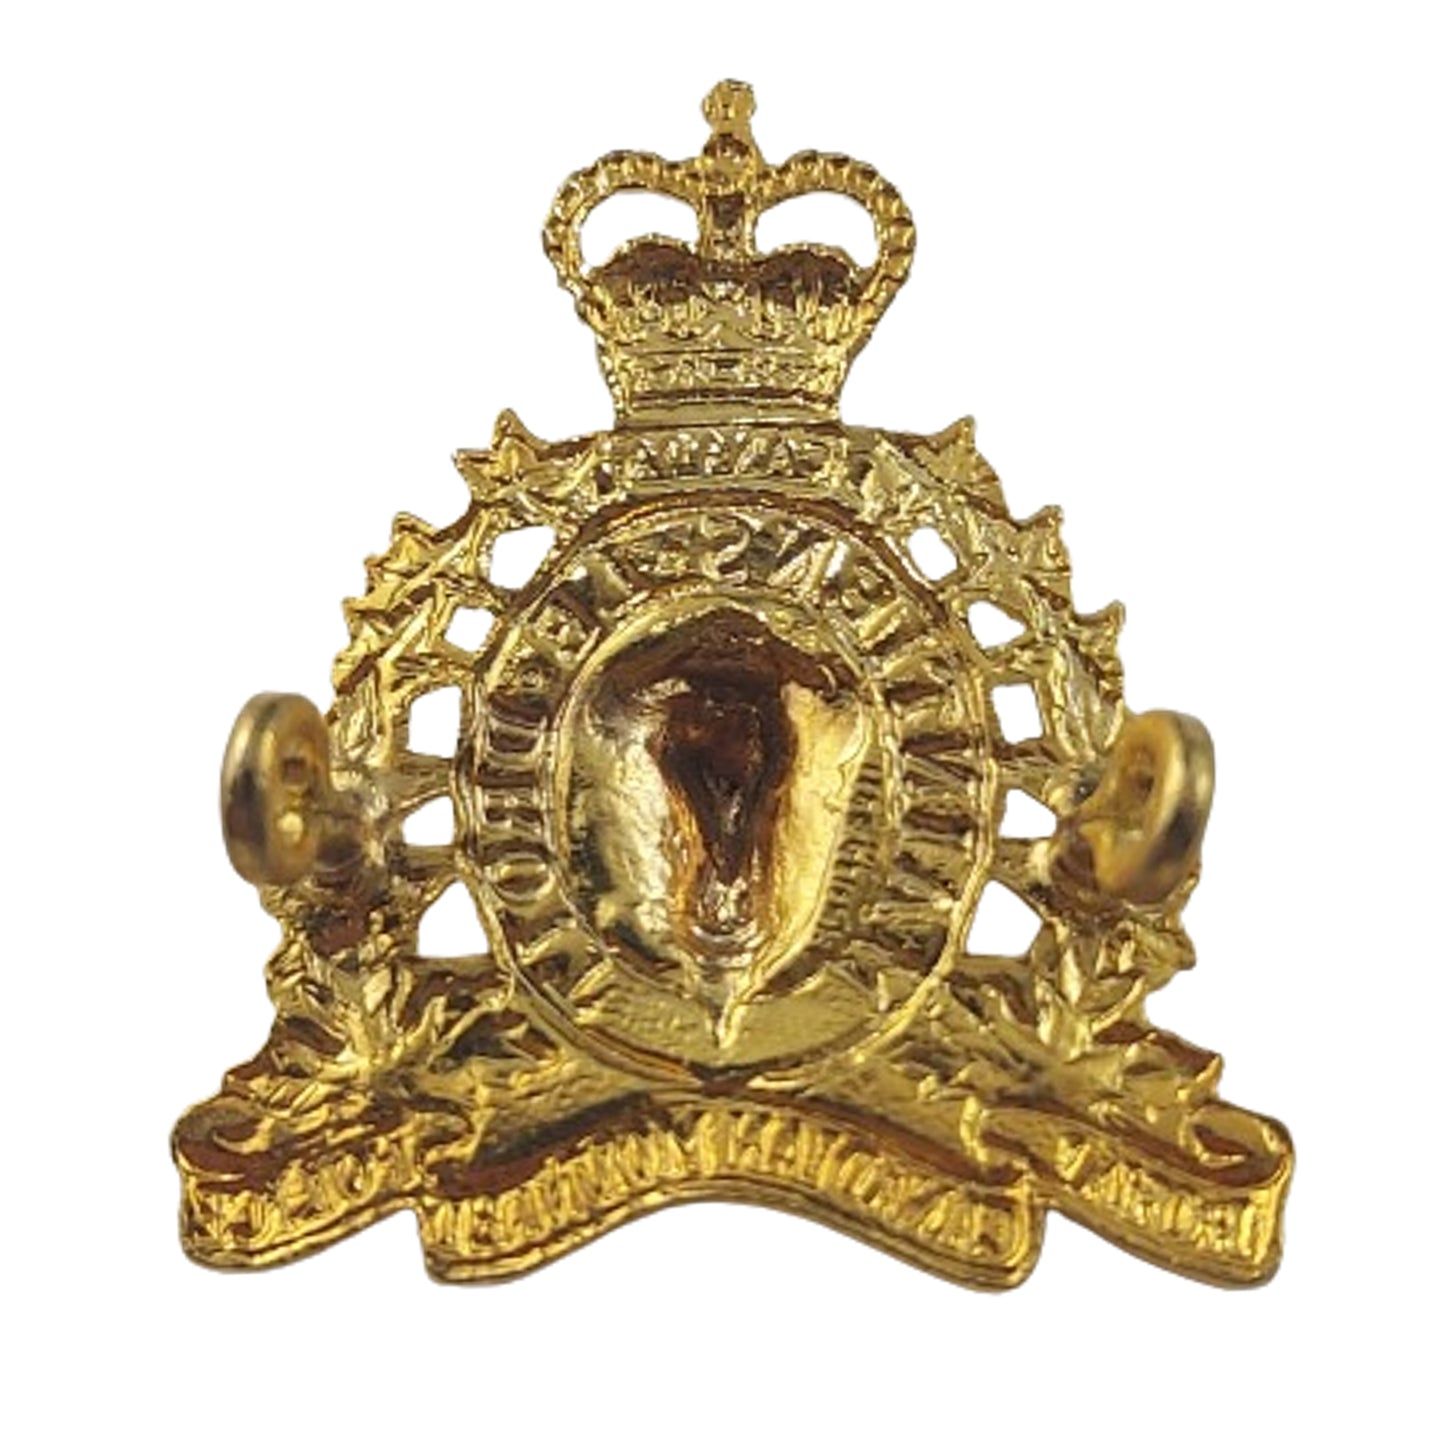 QEII RCMP Royal Canadian Mounted Police Collar Badge